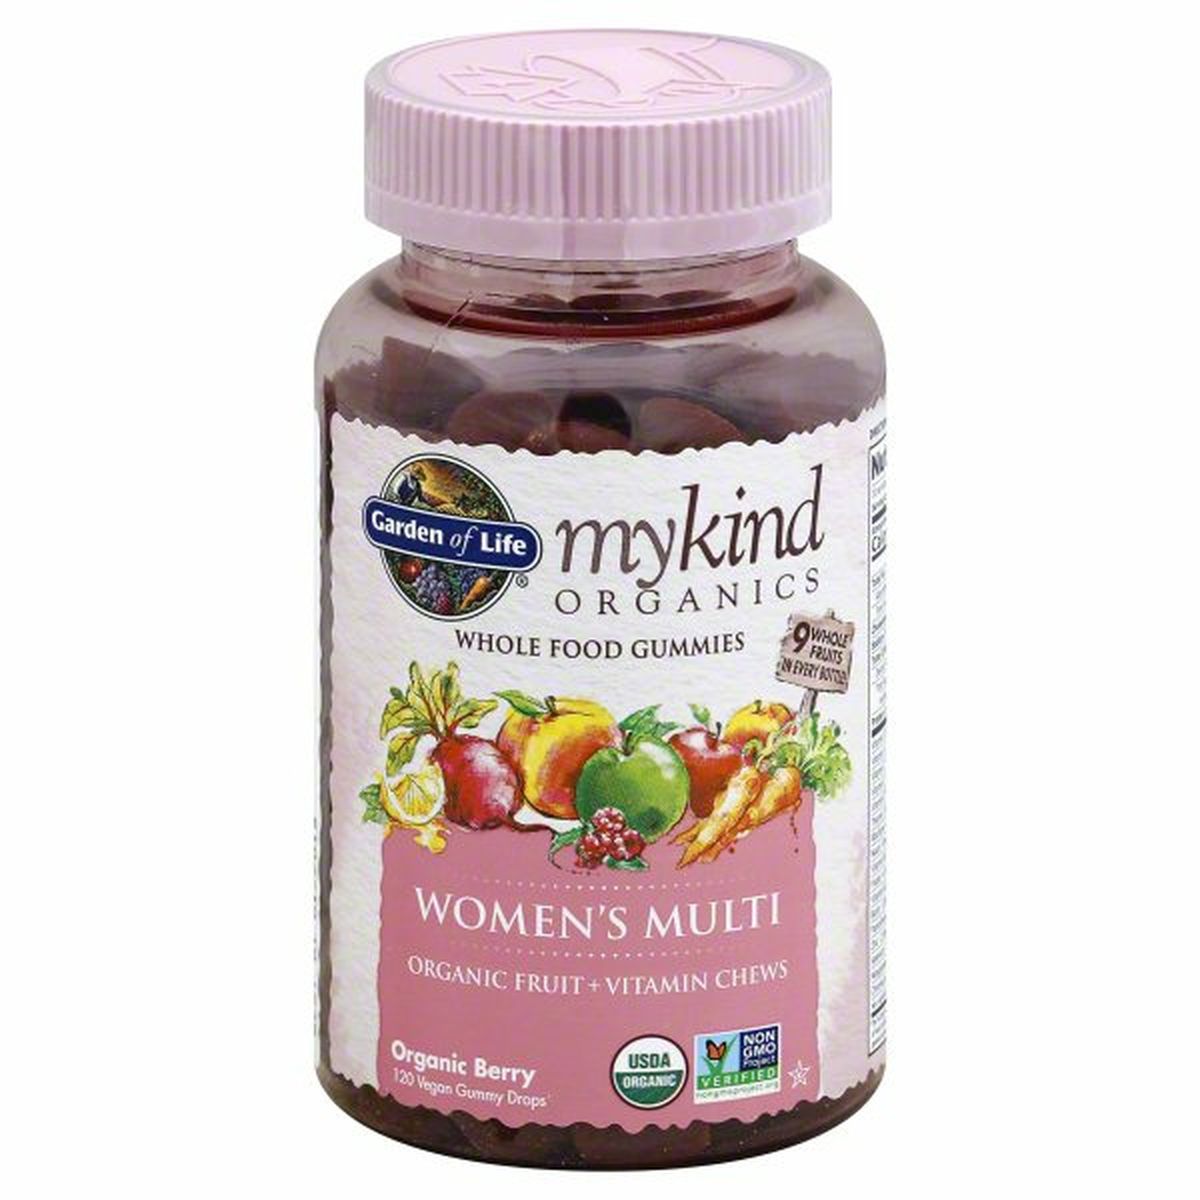 Calories in Garden of Life MyKind Organics Women's Multi, Vegan Gummy Drops, Organic Berry